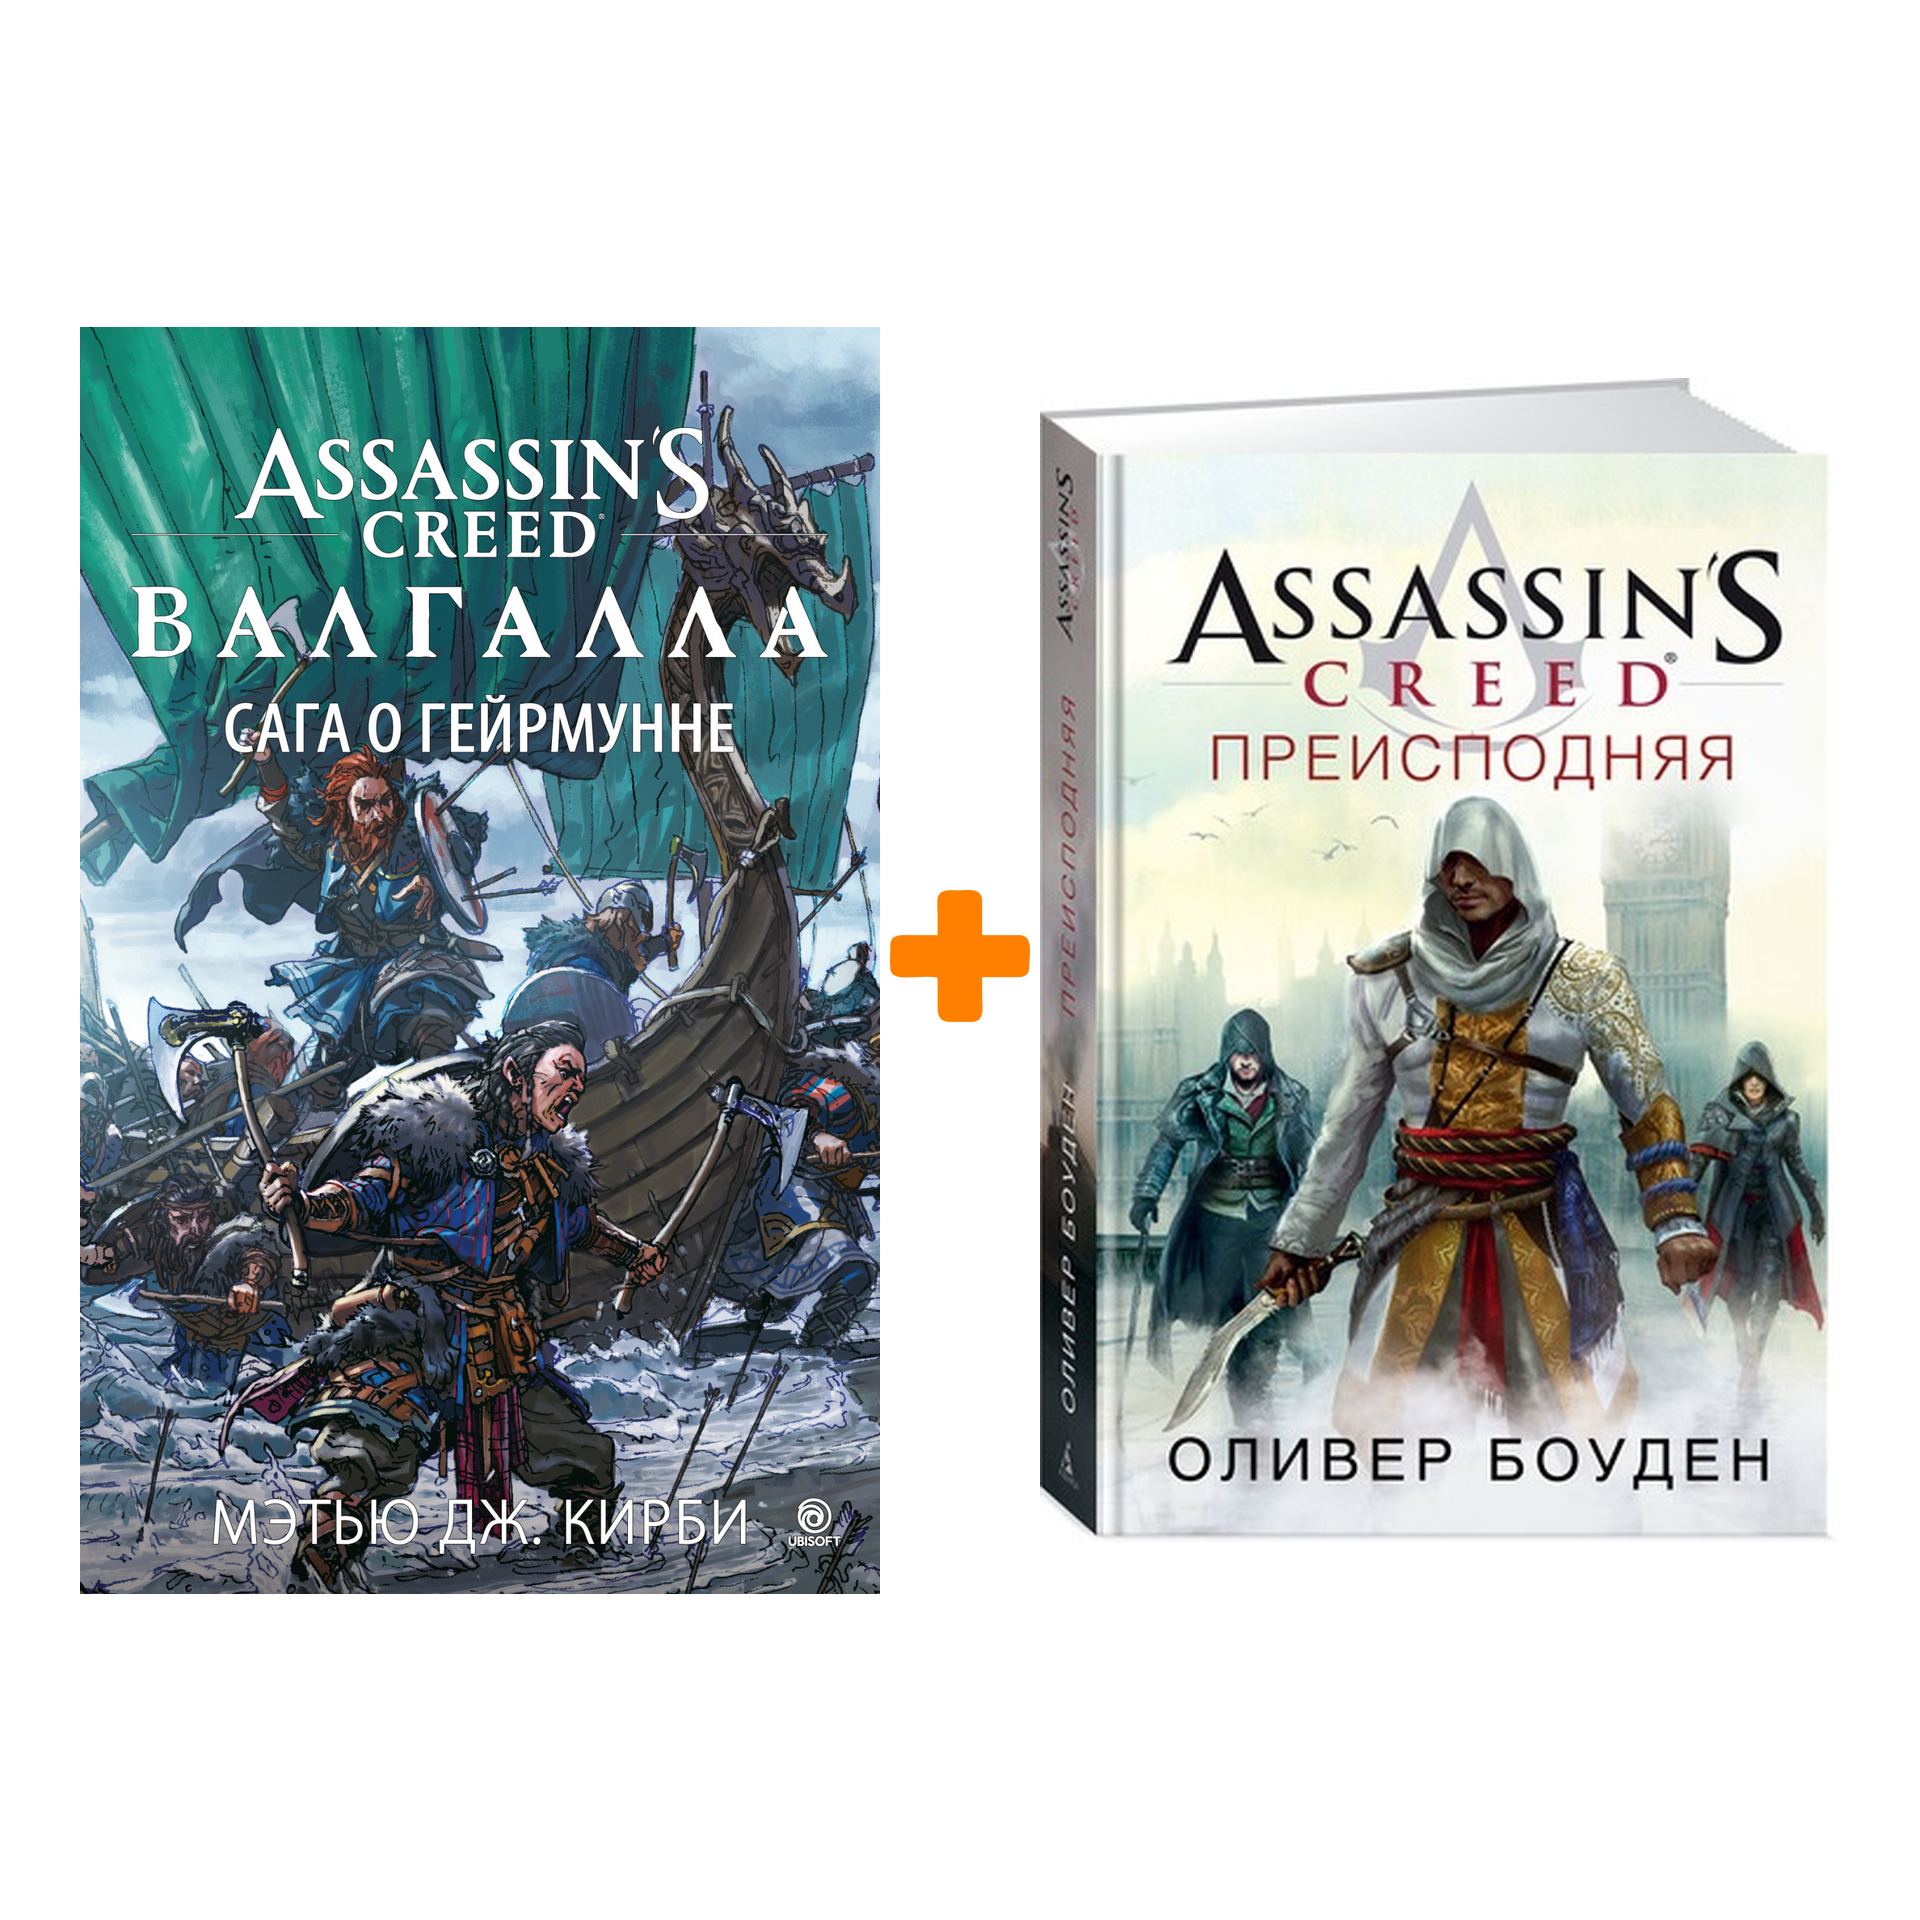 Книги Assassin`s Creed: Преисподняя + Валгалла – Сага о Гейрмунне. Комплект книг